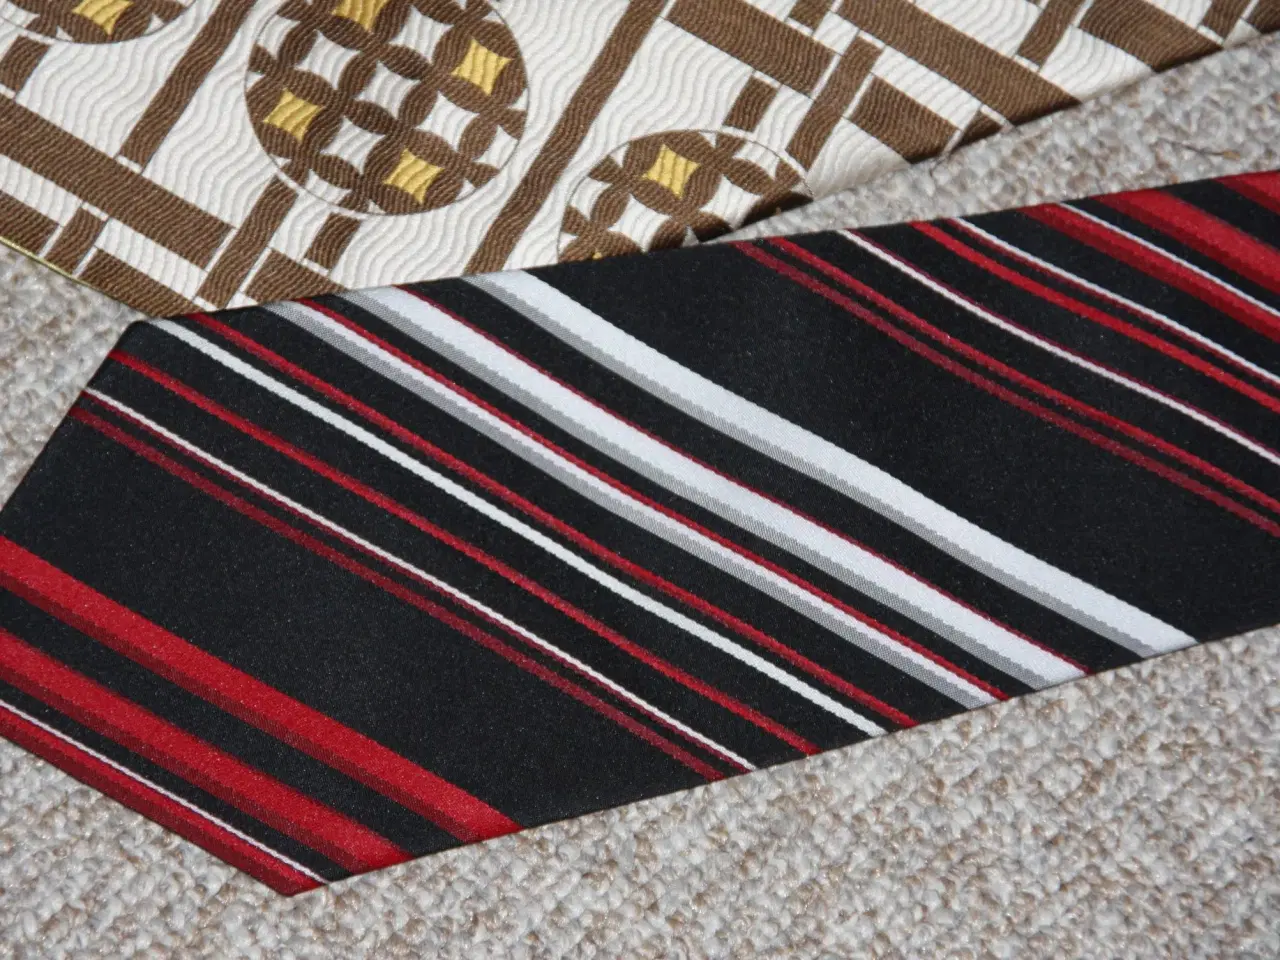 Billede 3 - Retro slips fra 60'erne stk.pris - 50 kr